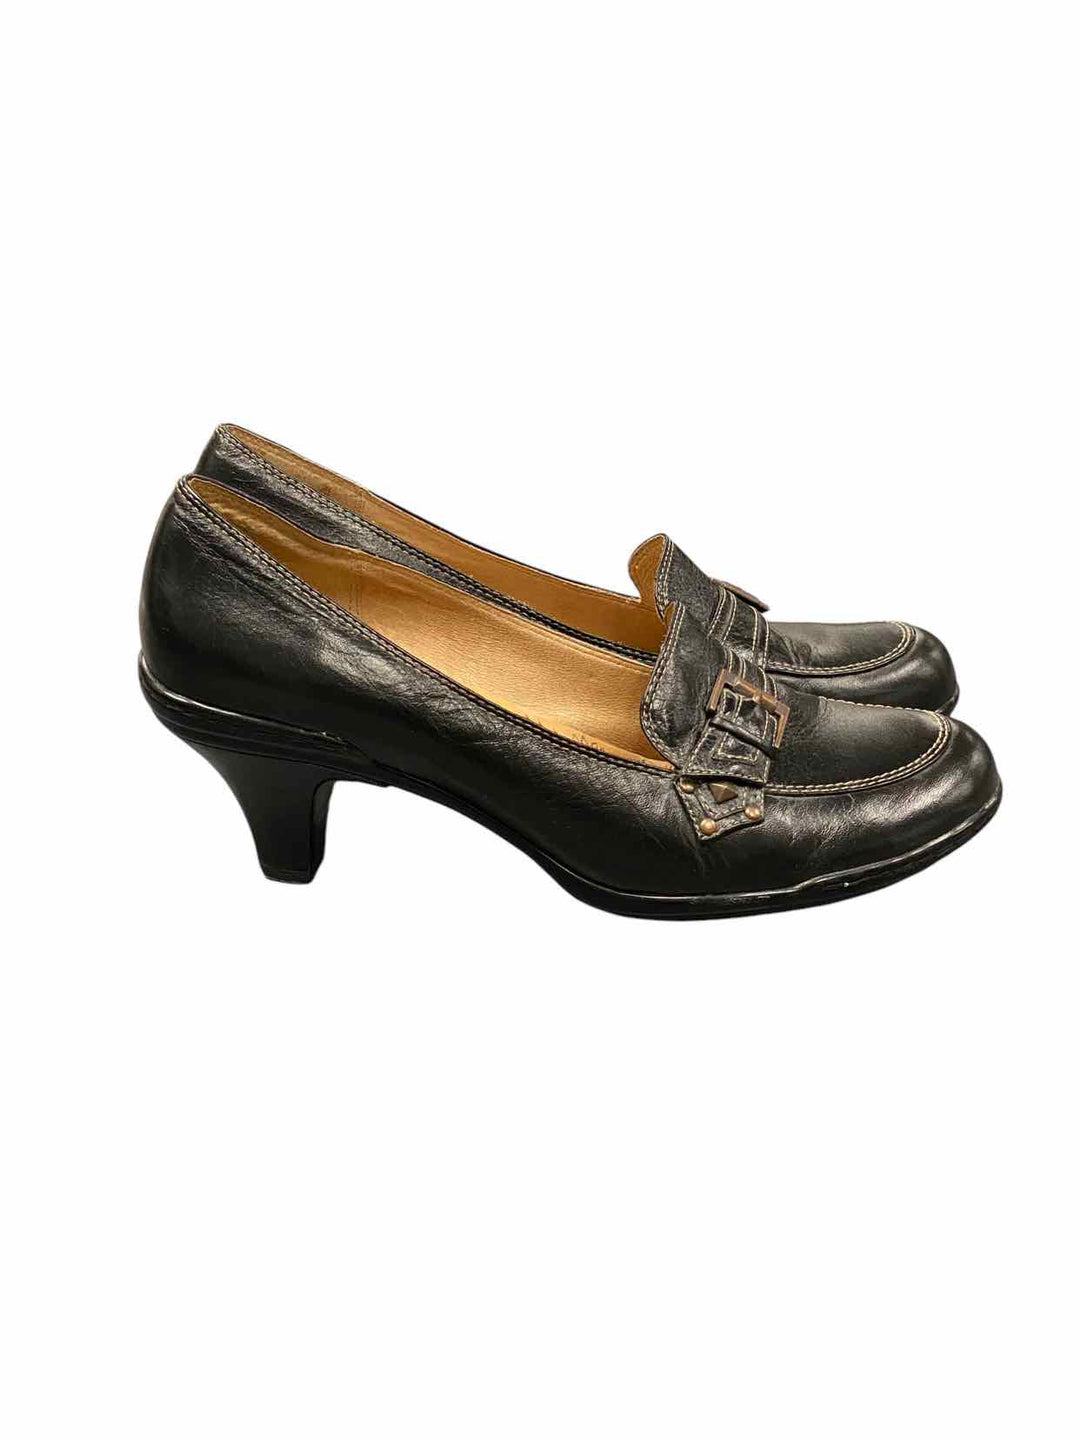 Sofft Shoe Size 10 Black Leather Heels